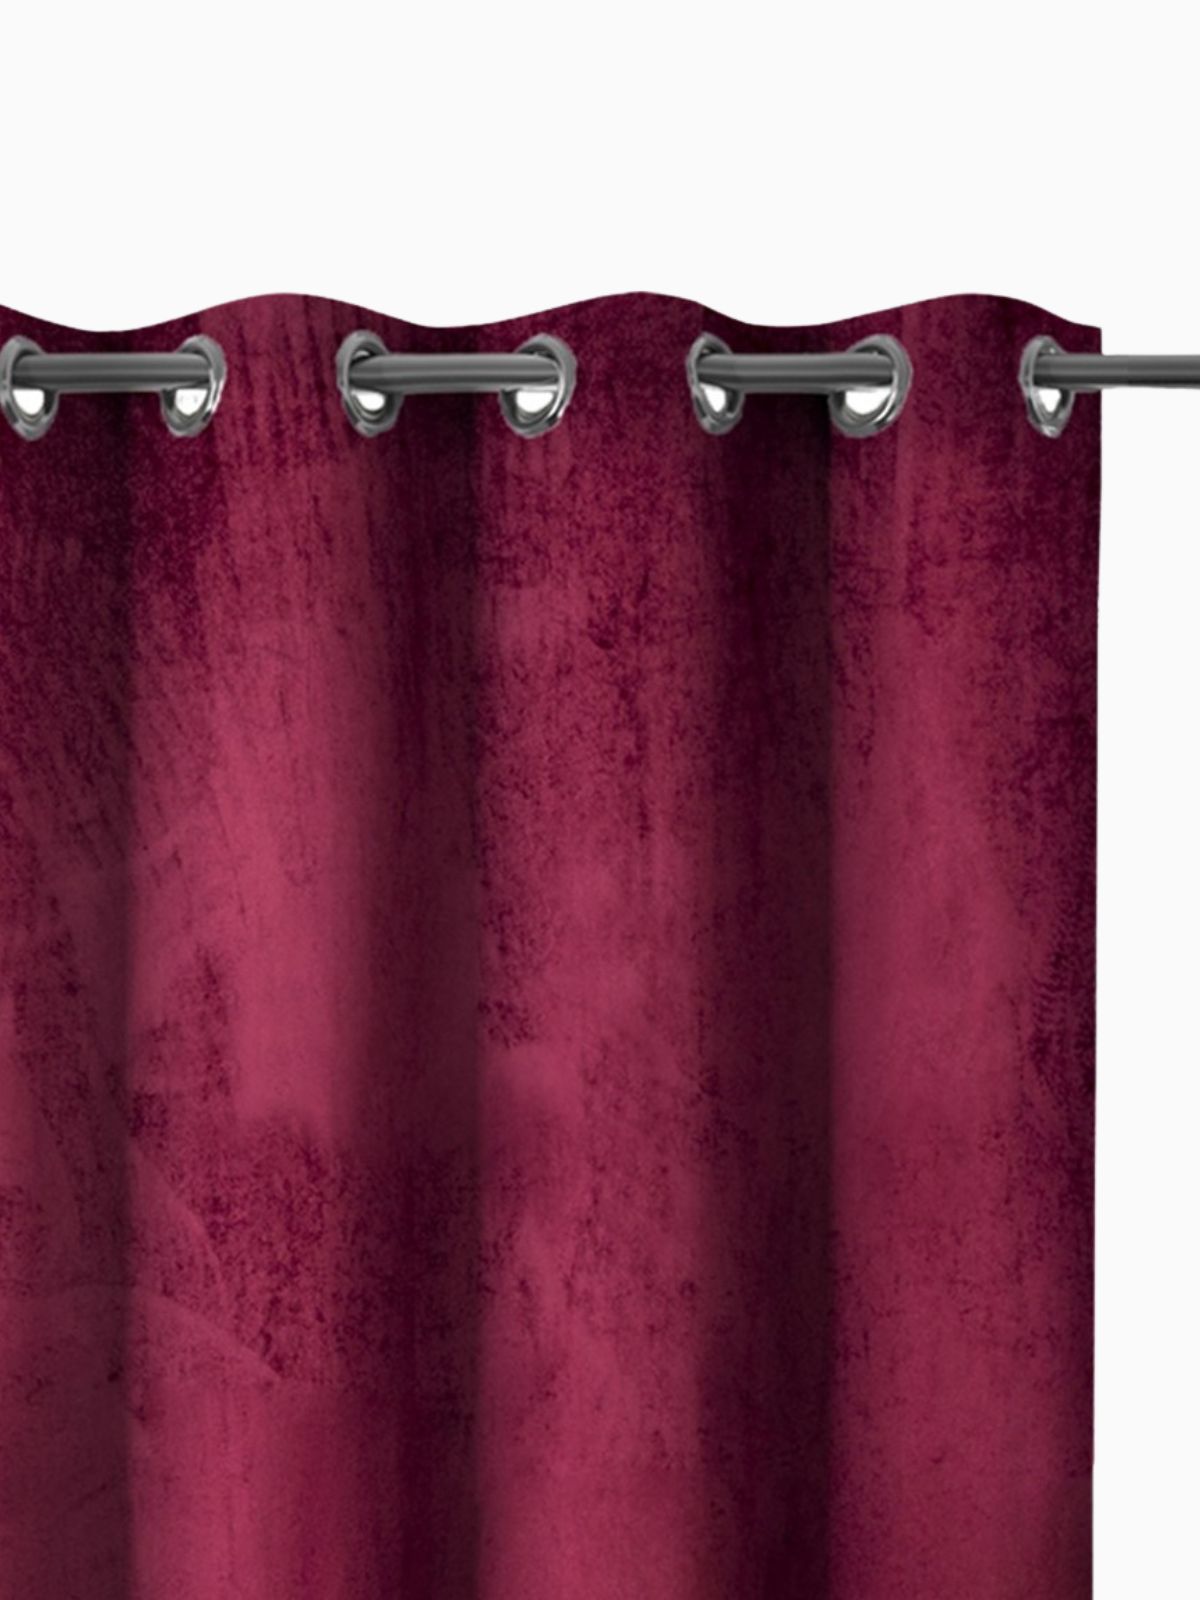 Tenda Velvet in colore bordeaux, effetto velluto 140x245 cm.-1